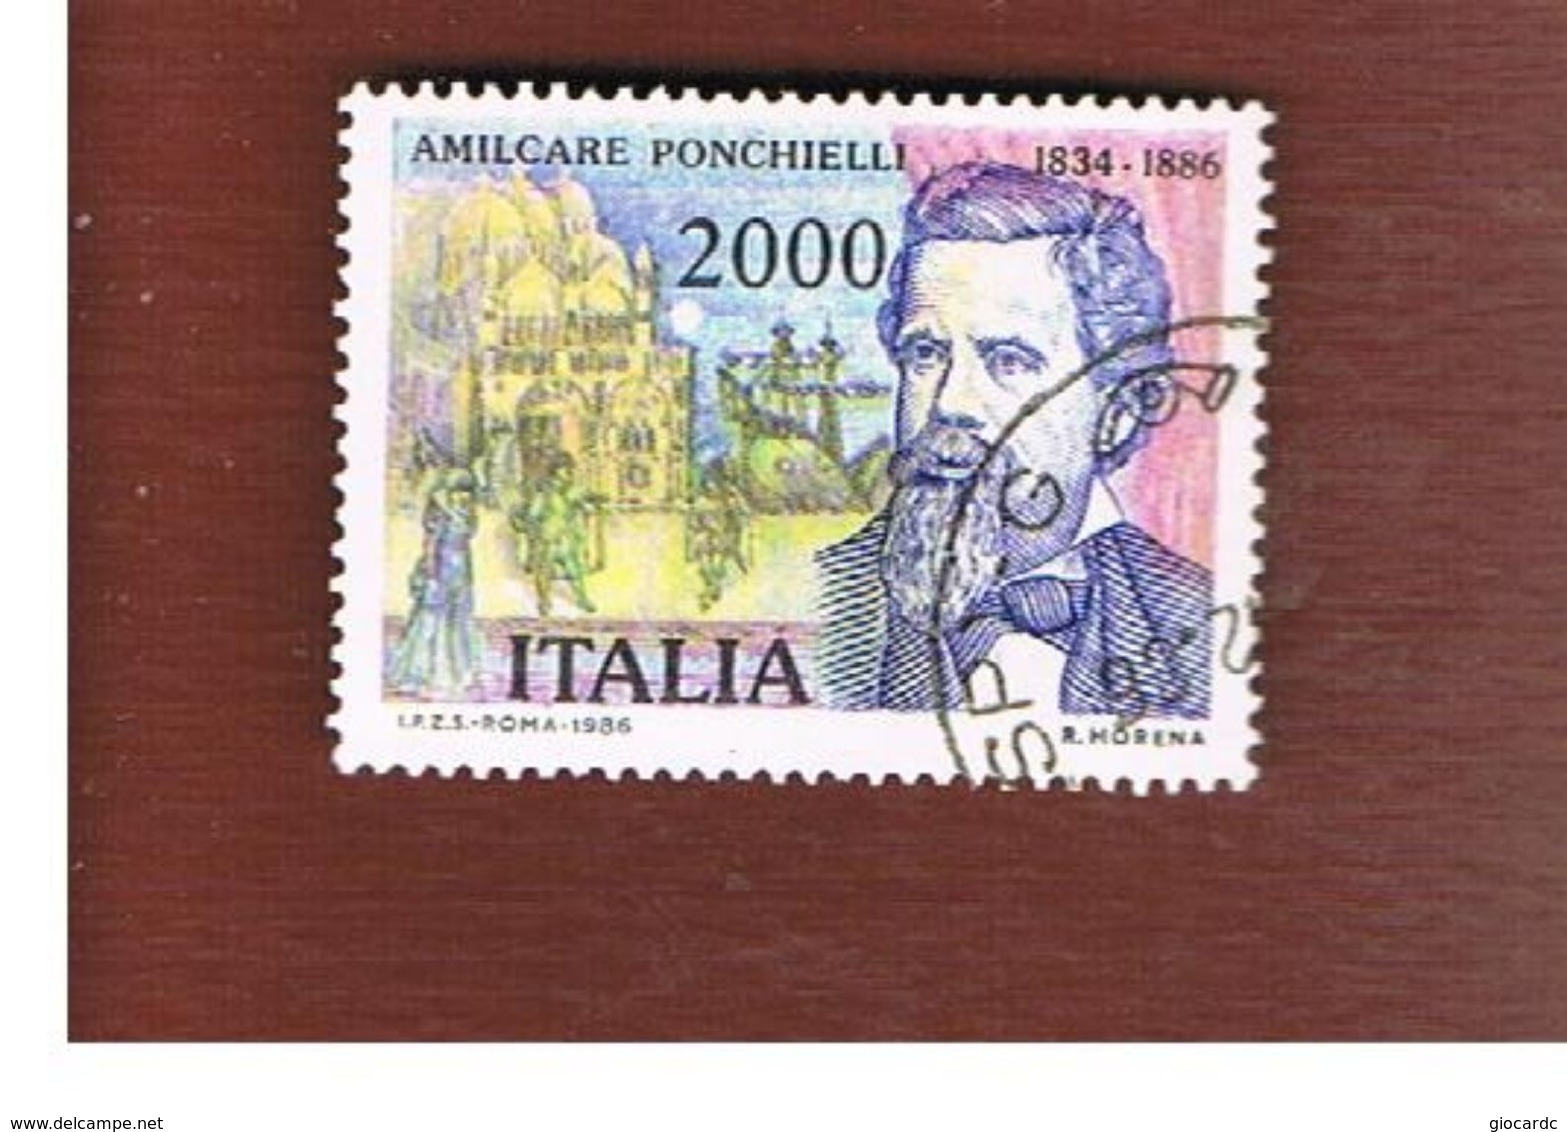 ITALIA REPUBBLICA  - SASS. 1753     -      1986  A. PONCHIELLI  -      USATO  -   RIF. 30834 - 1981-90: Usados